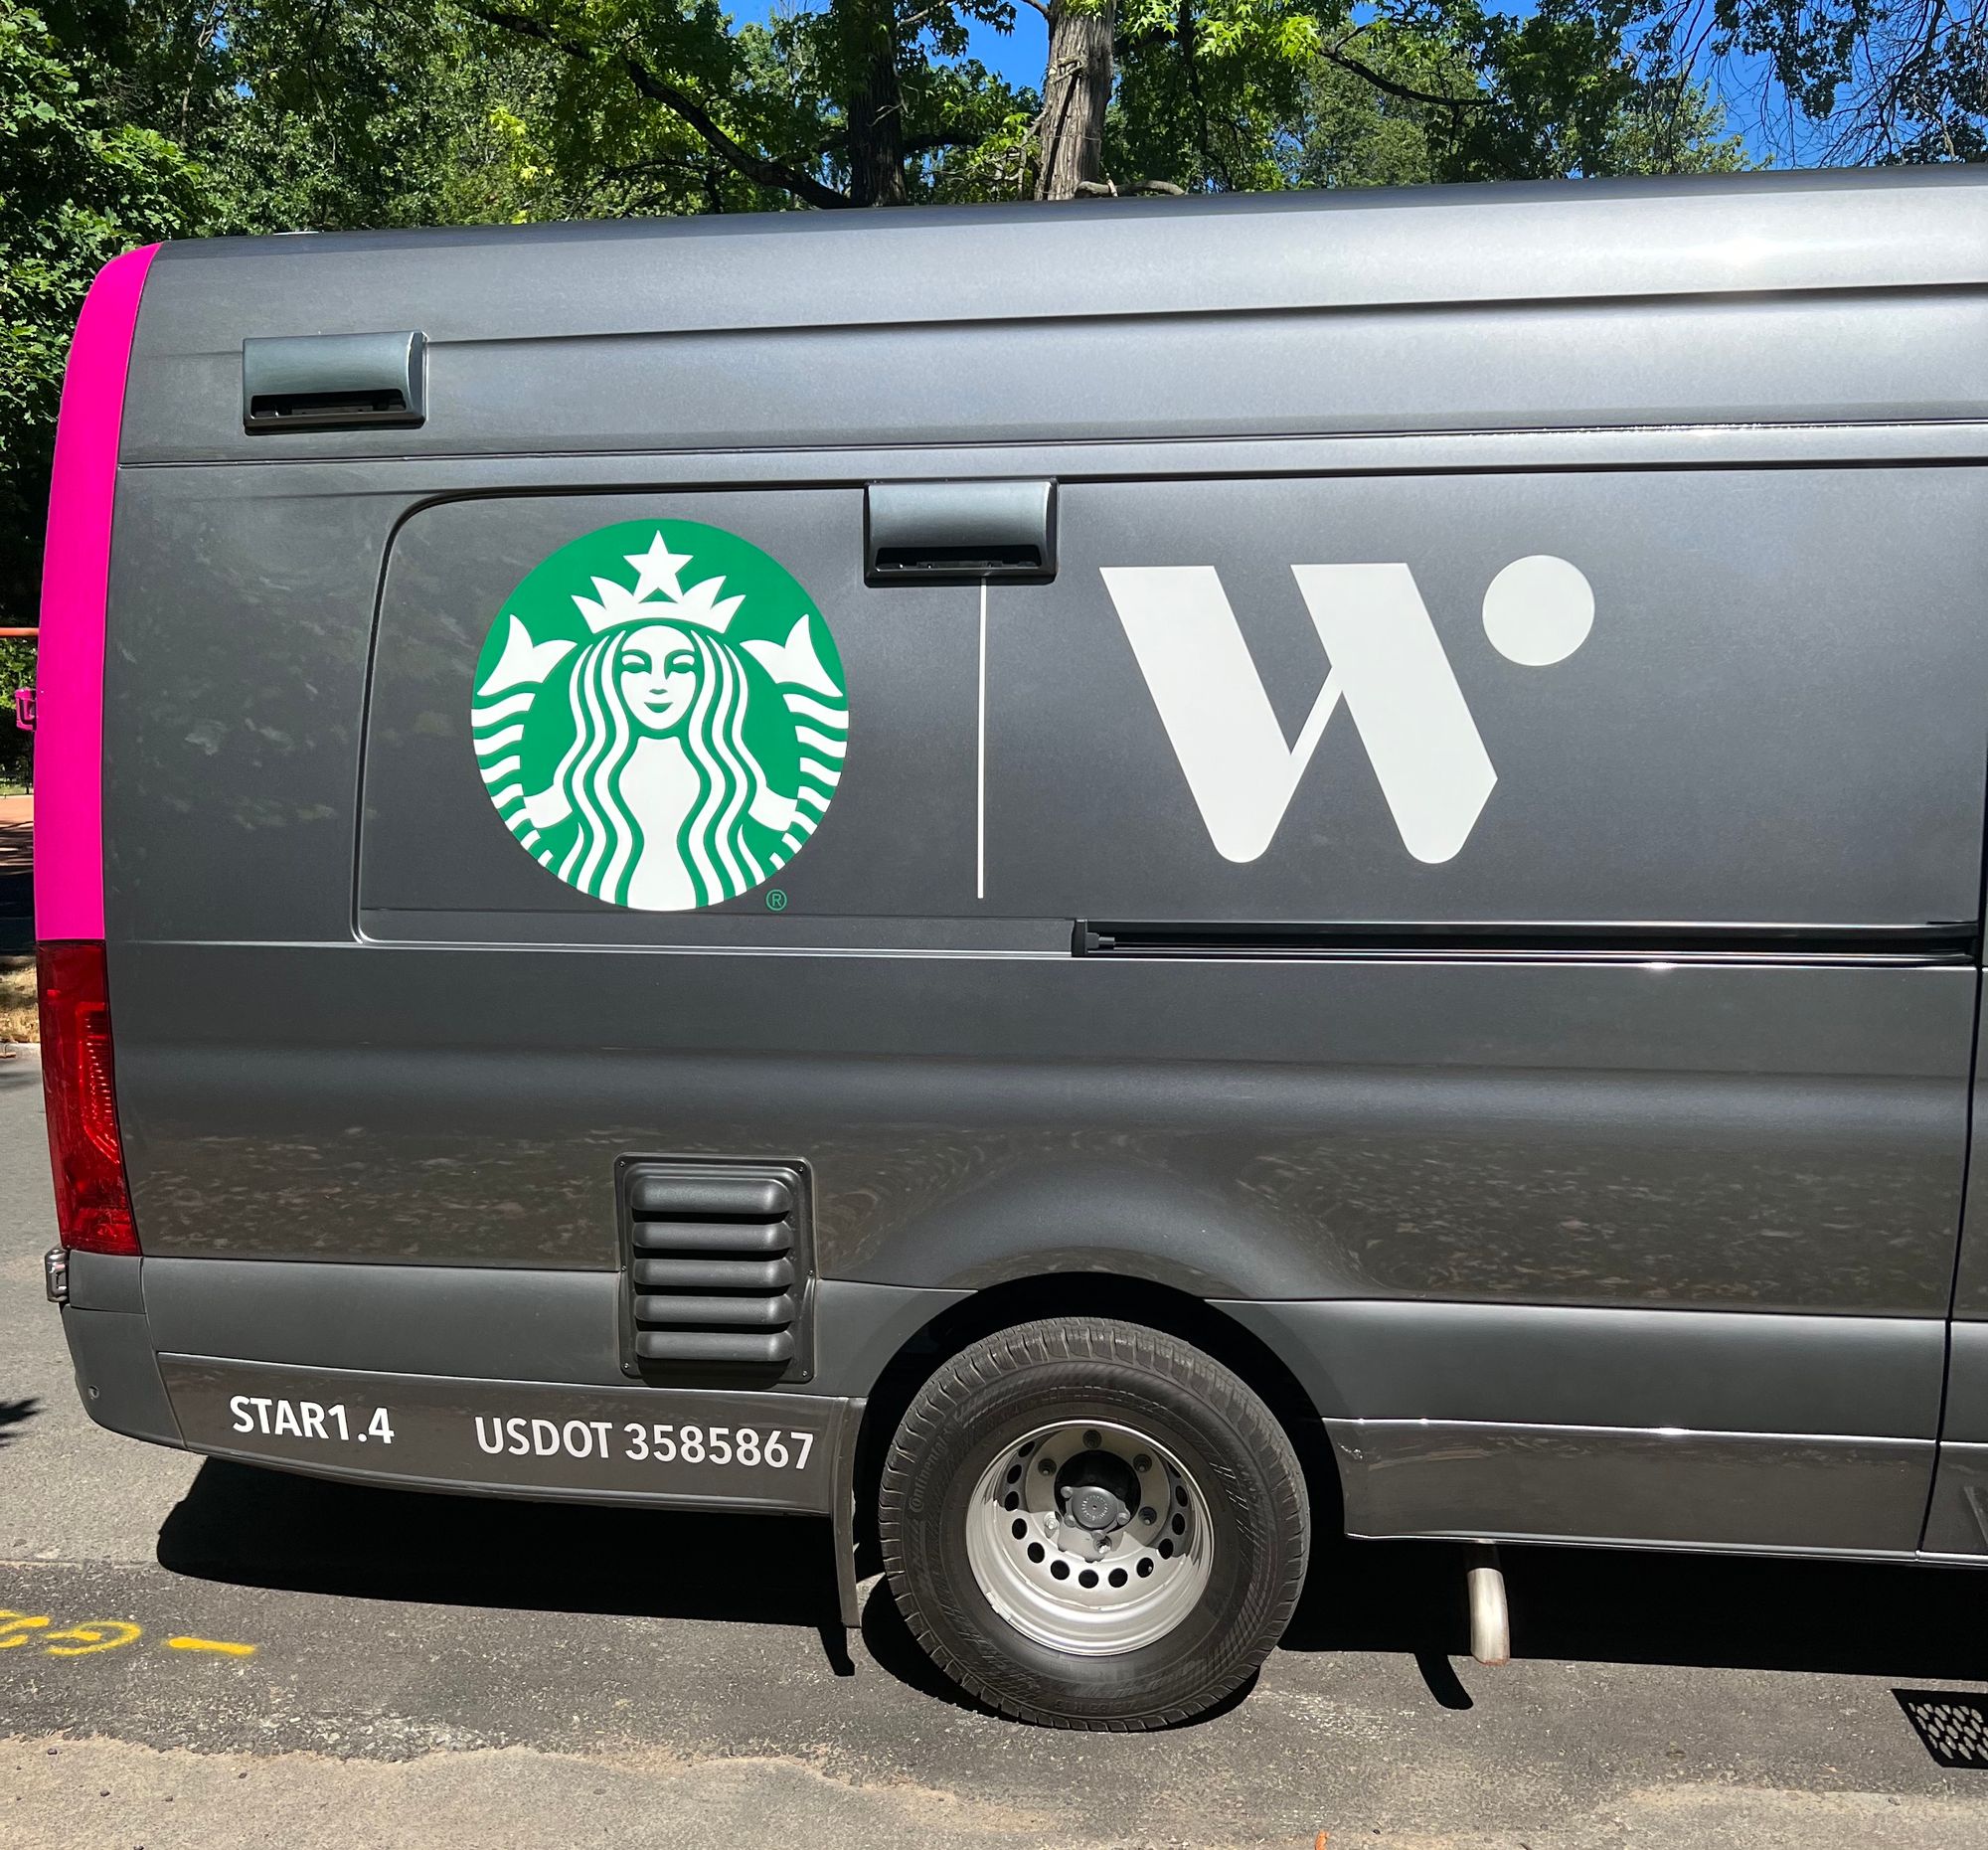 Wonder Brings Mobile Starbucks Kitchen Direct-To-Doorstep In NJ Pilot